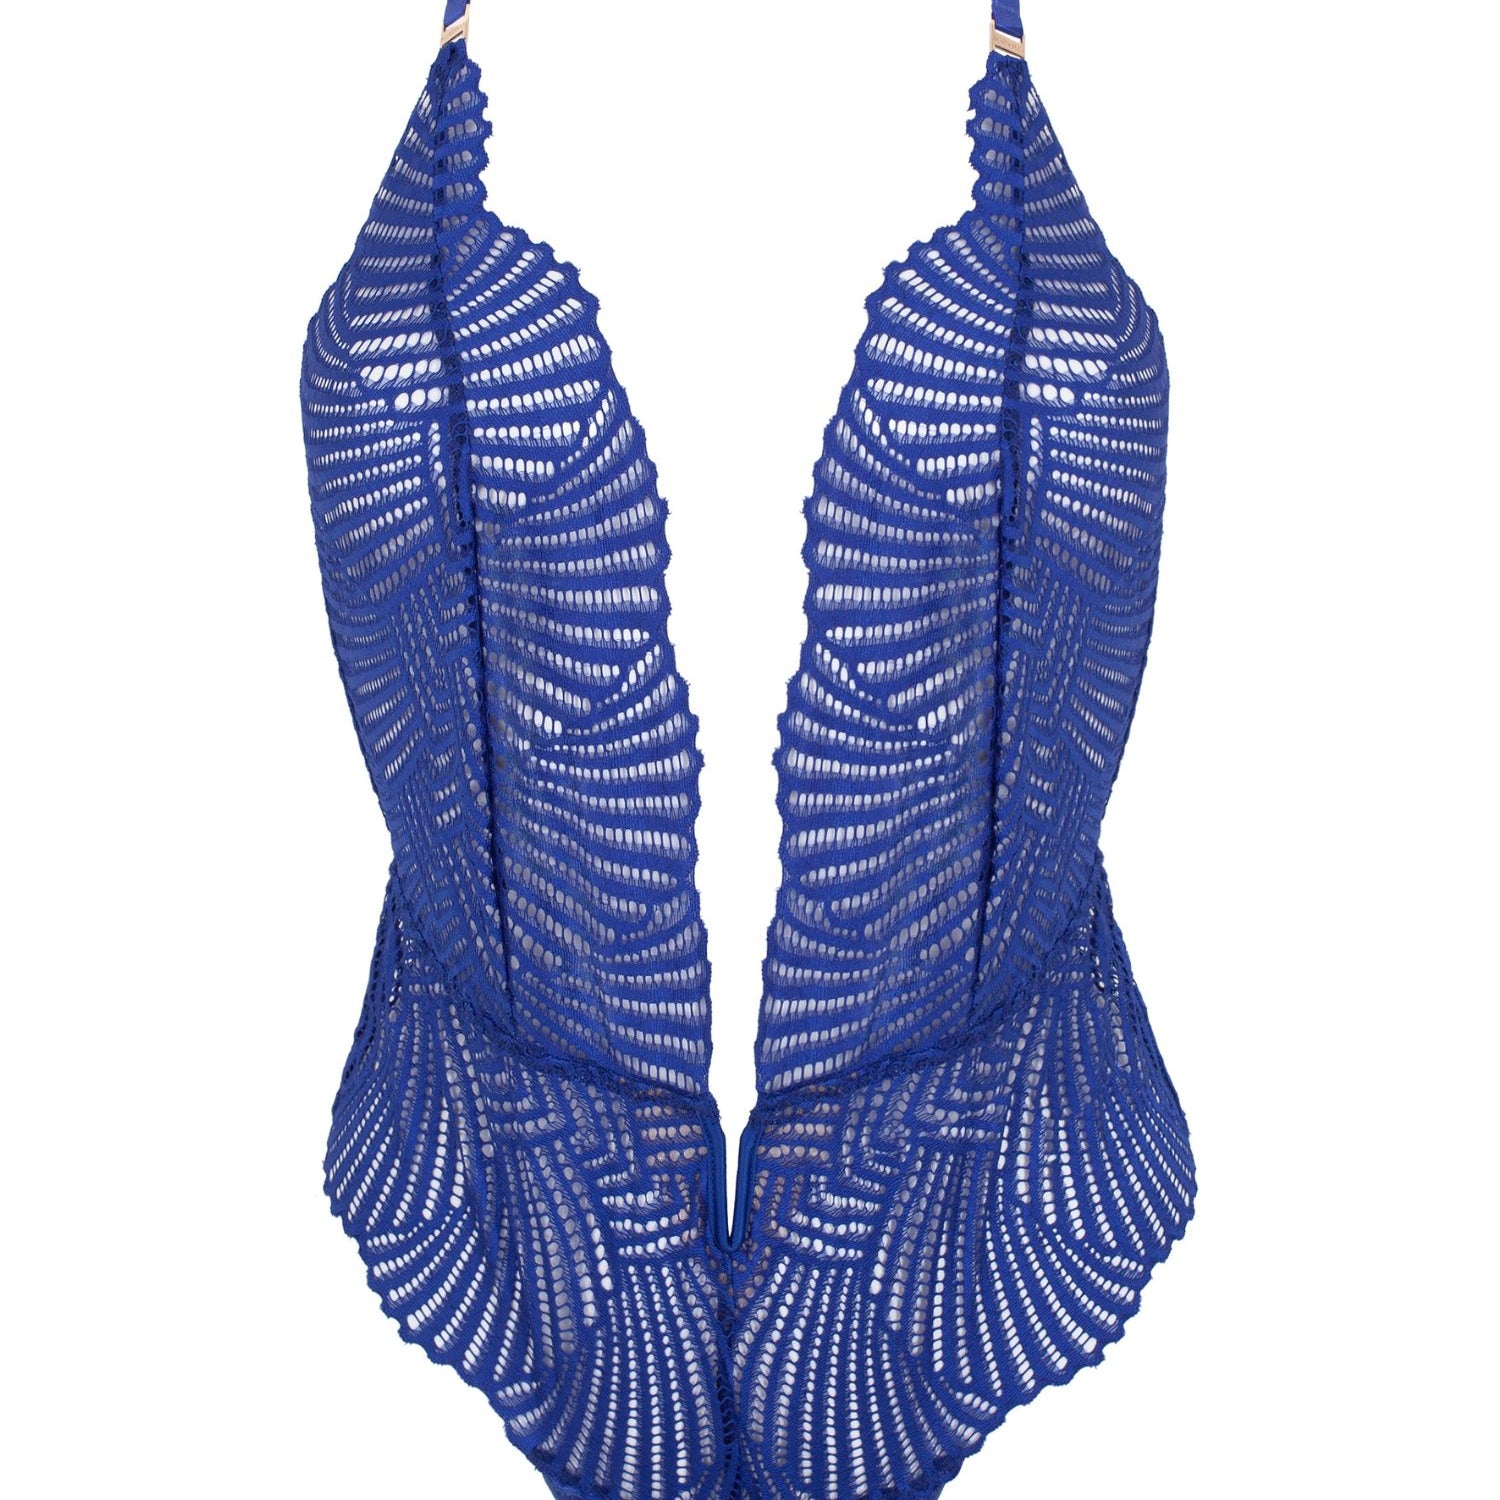 Bluebella Iris Soft Body - Blue Lace Cross-Back Bodysuit | Avec Amour Sexy Lingerie